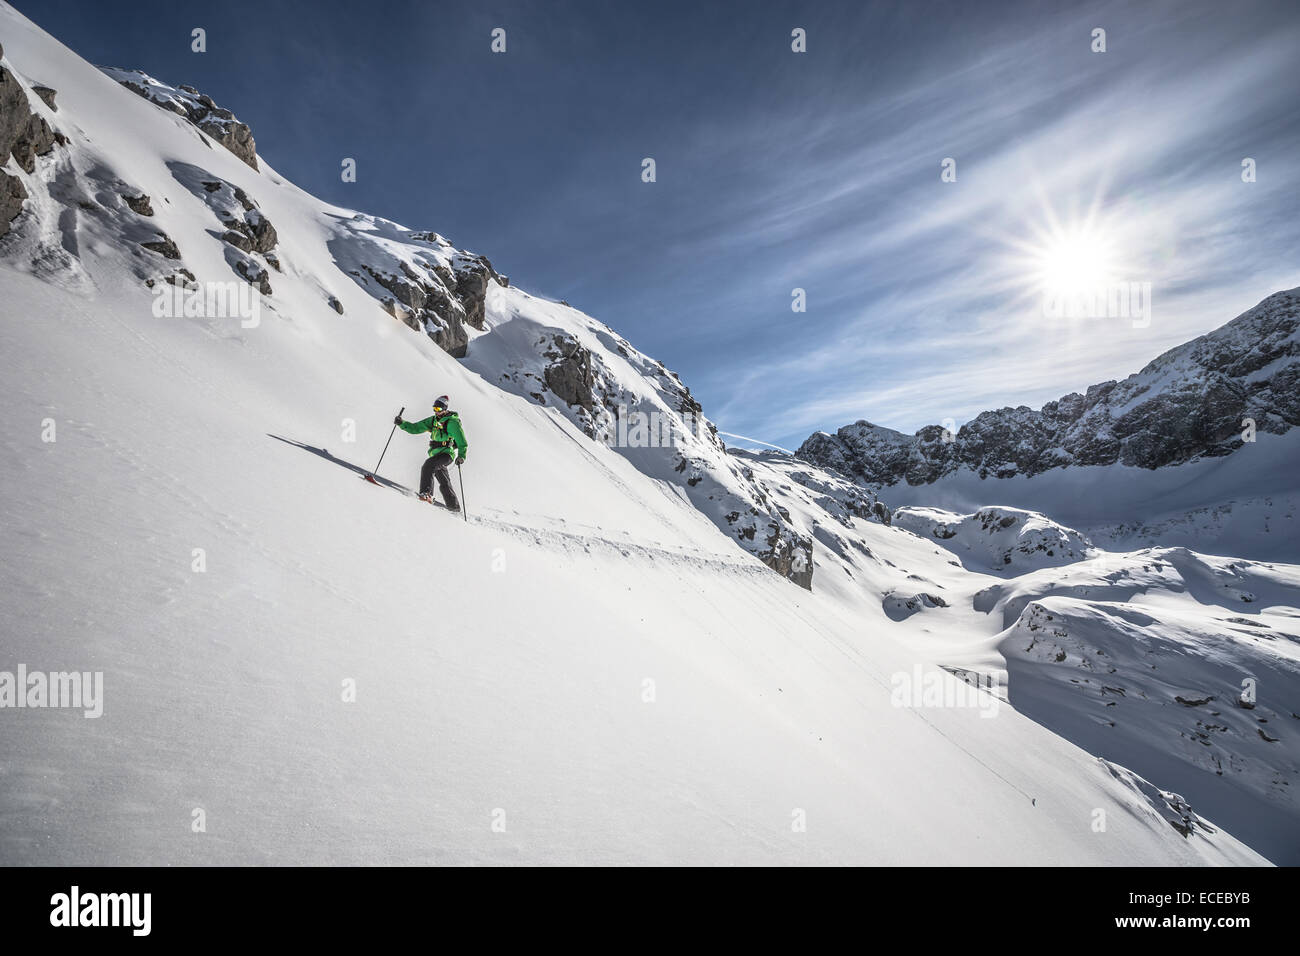 Austria, Male skier heading uphill Stock Photo